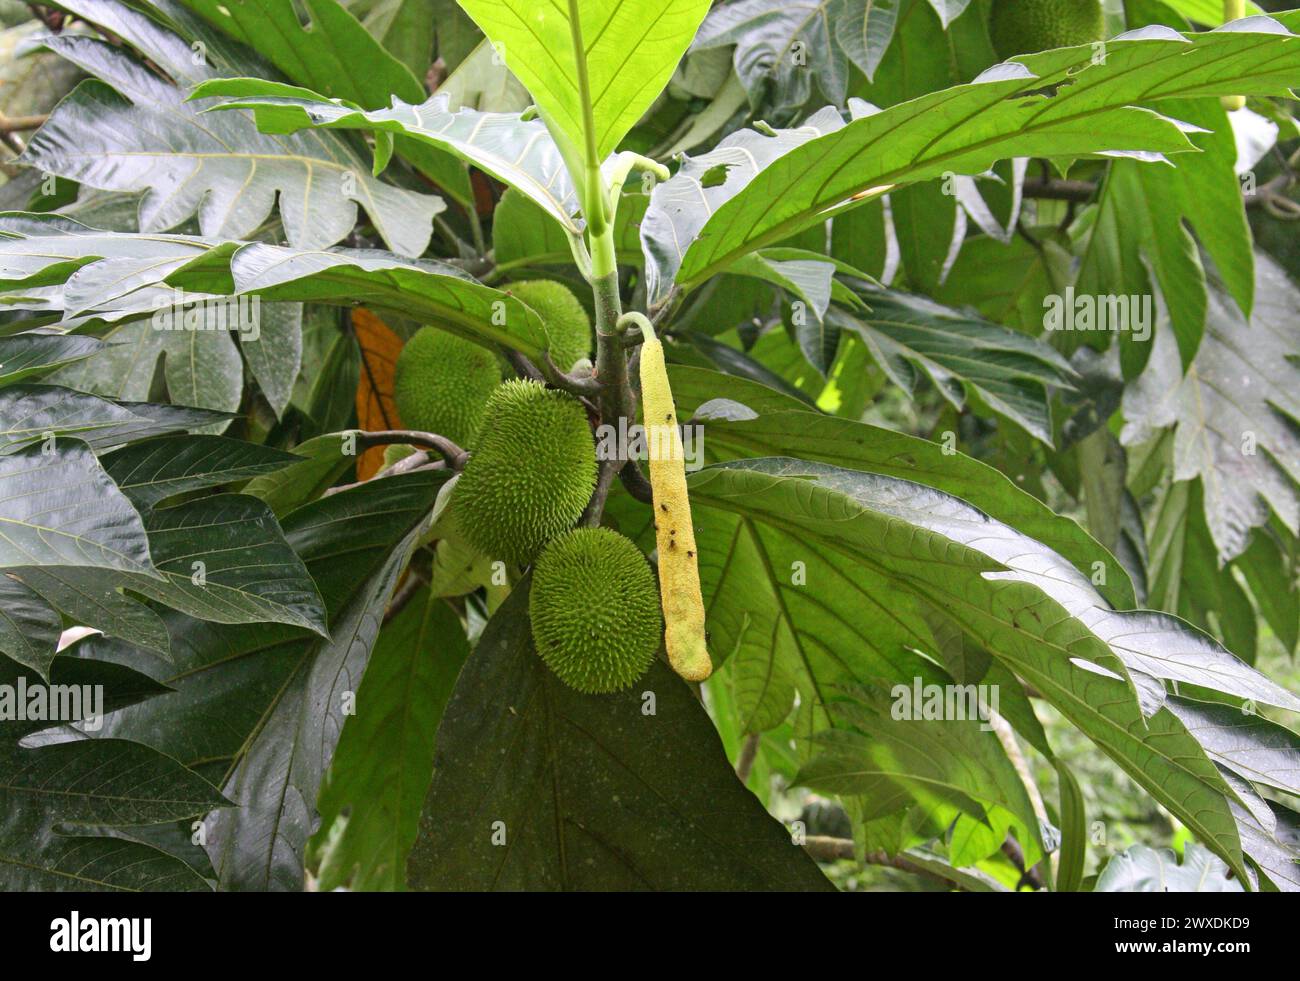 The Breadnut, Artocarpus camansi, Moraceae. Costa Rica. The Breadnut, Artocarpus camansi, is a medium-sized tree found in the mulberry family Moraceae Stock Photo